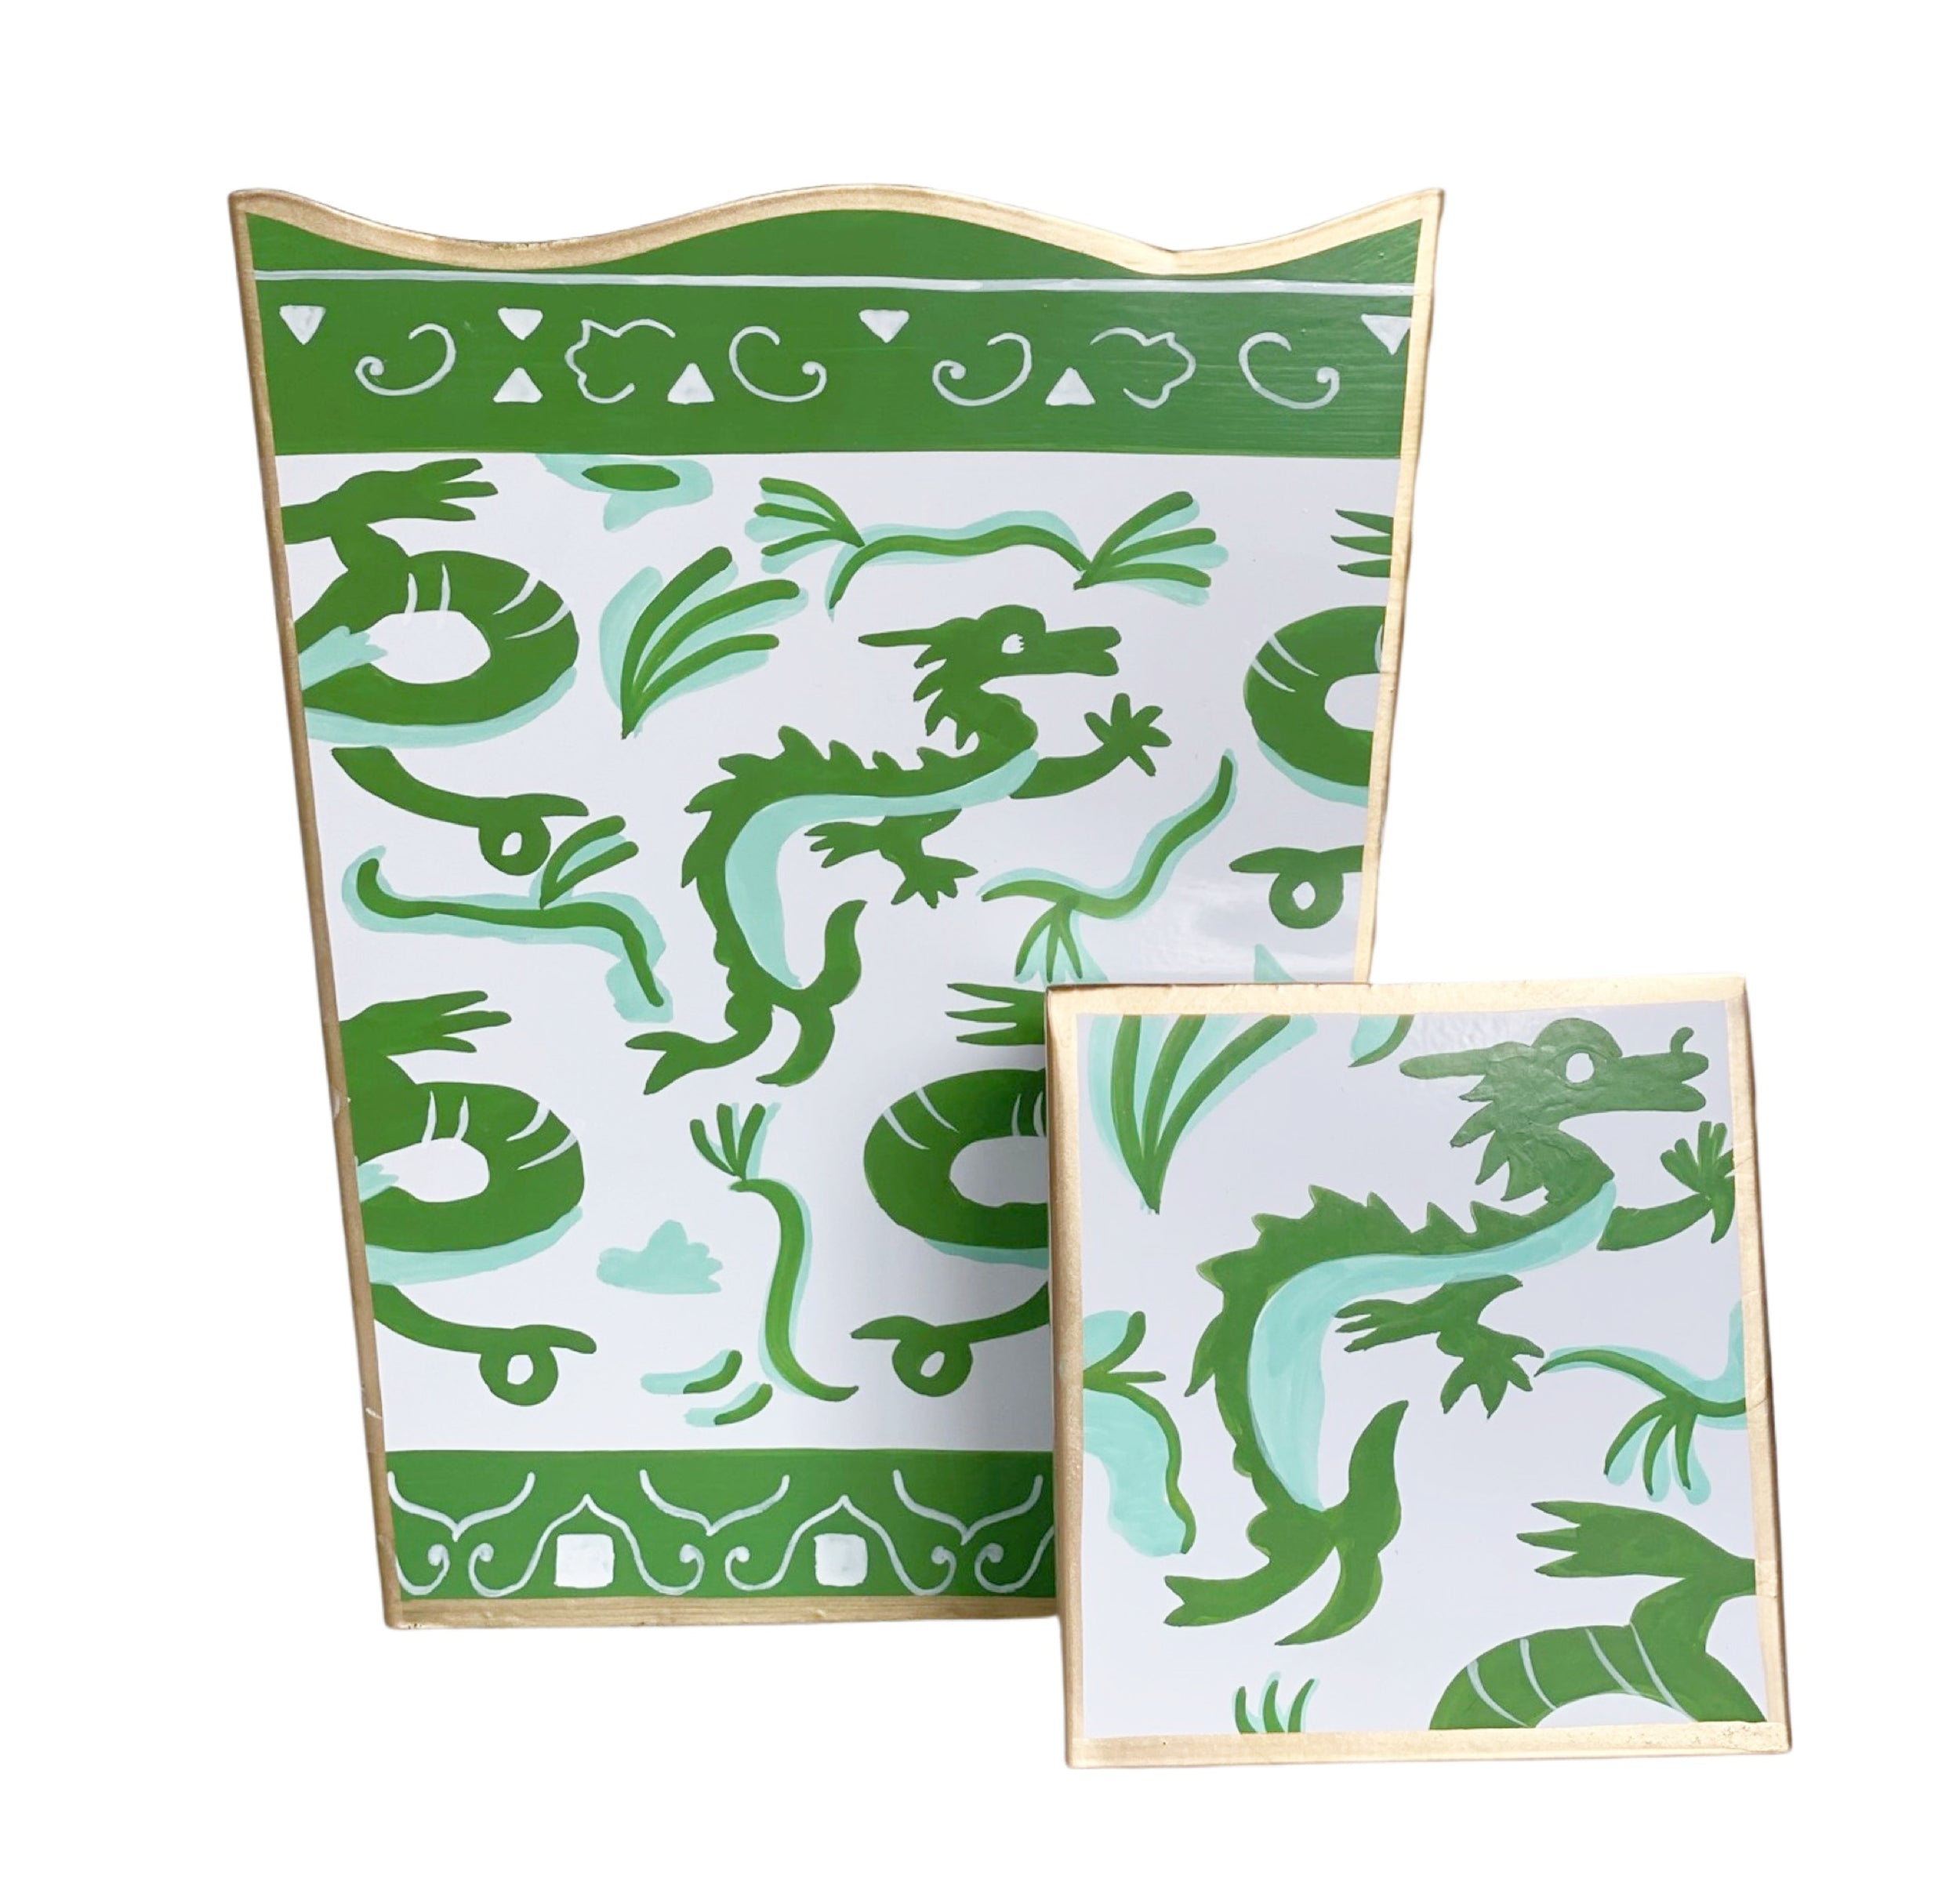 Dana Gibson Wastebasket in Green Dragon, Tissue Box